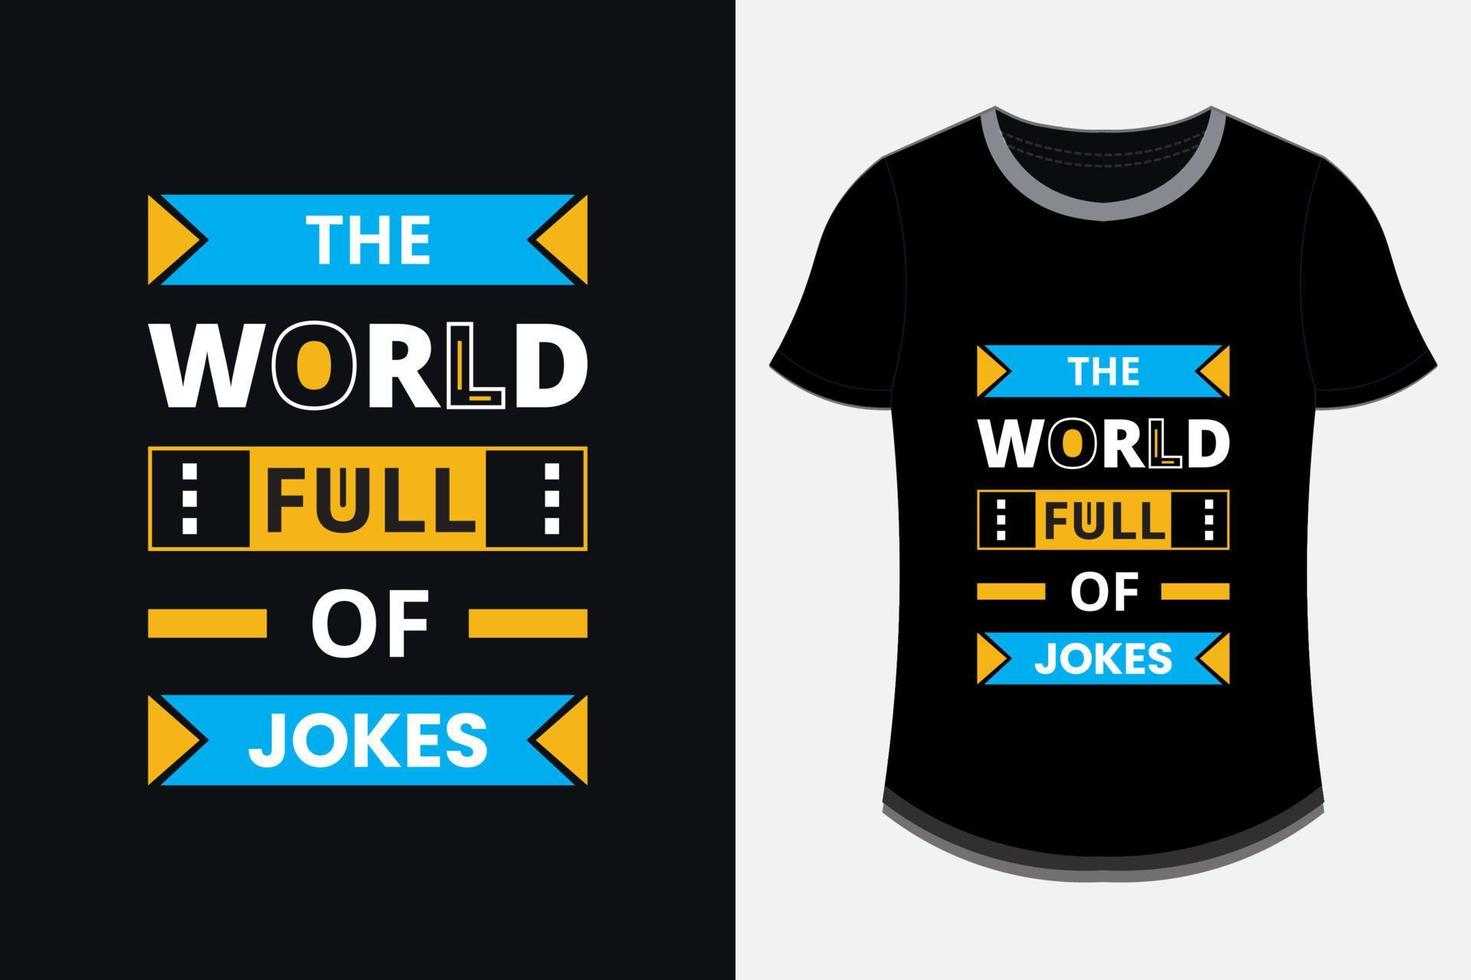 de wereld vol grappen moderne inspirerende citaten t-shirtontwerp vector